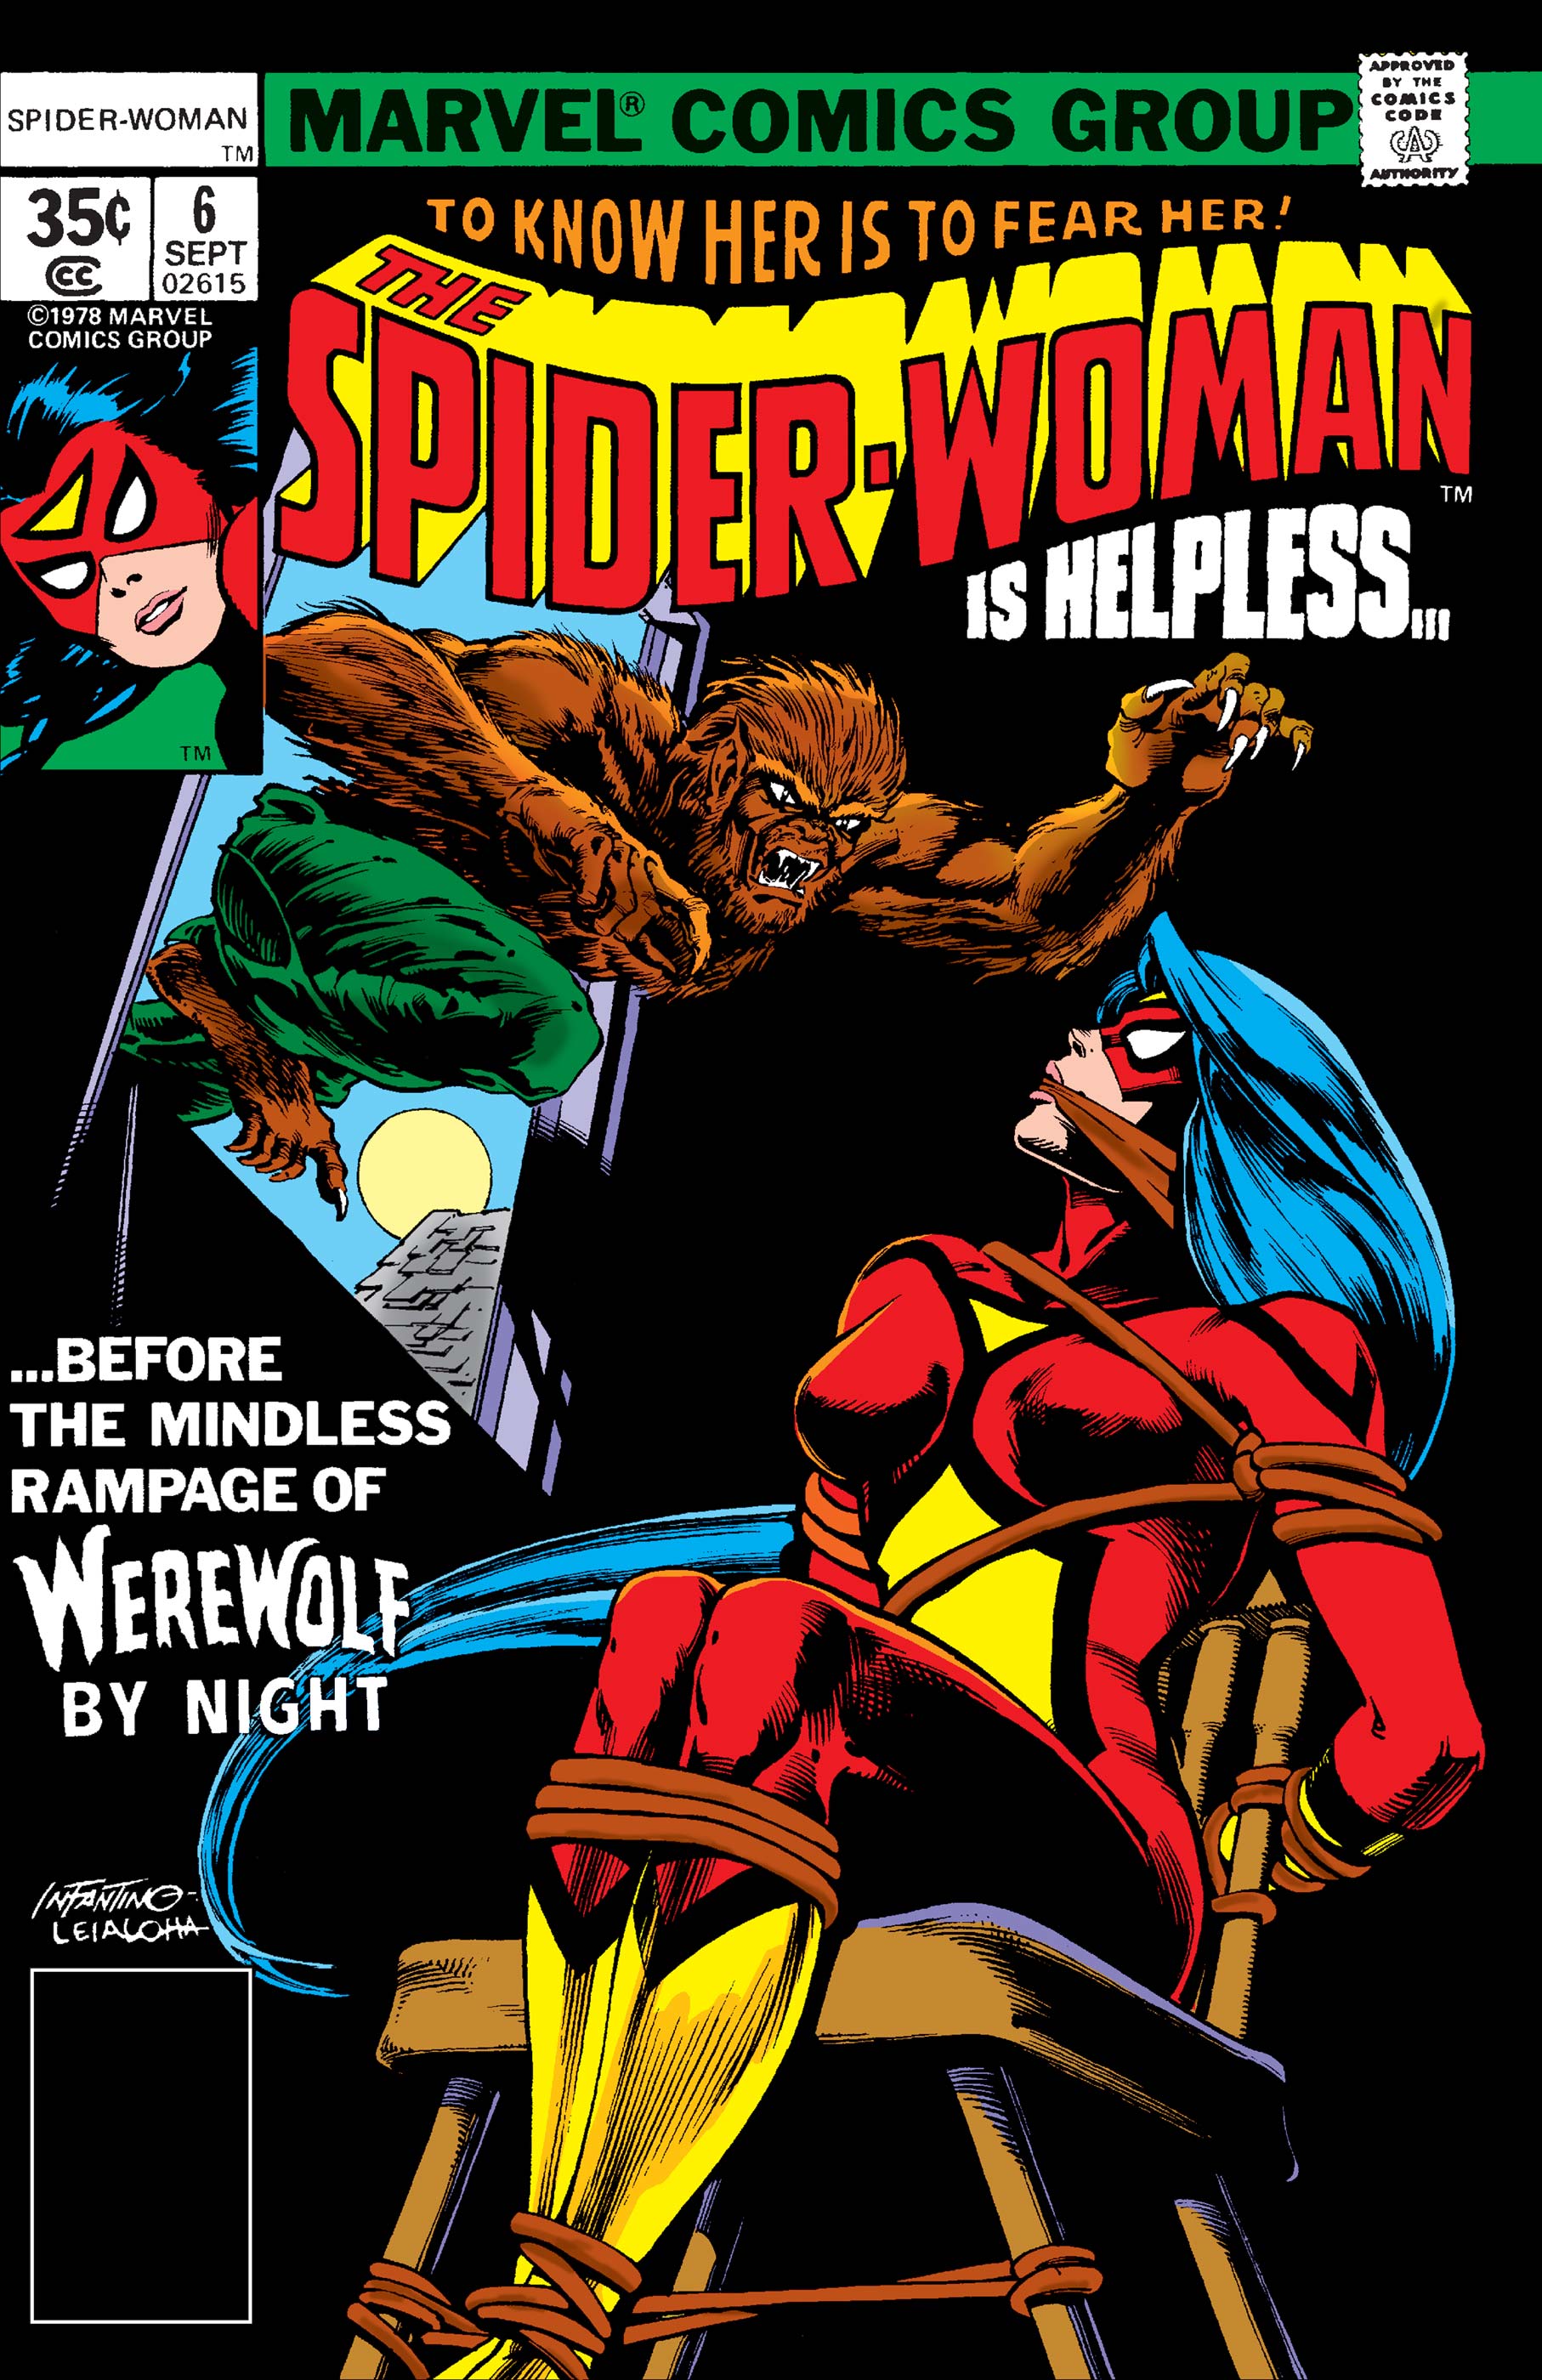 Spider-Woman (1978) #6